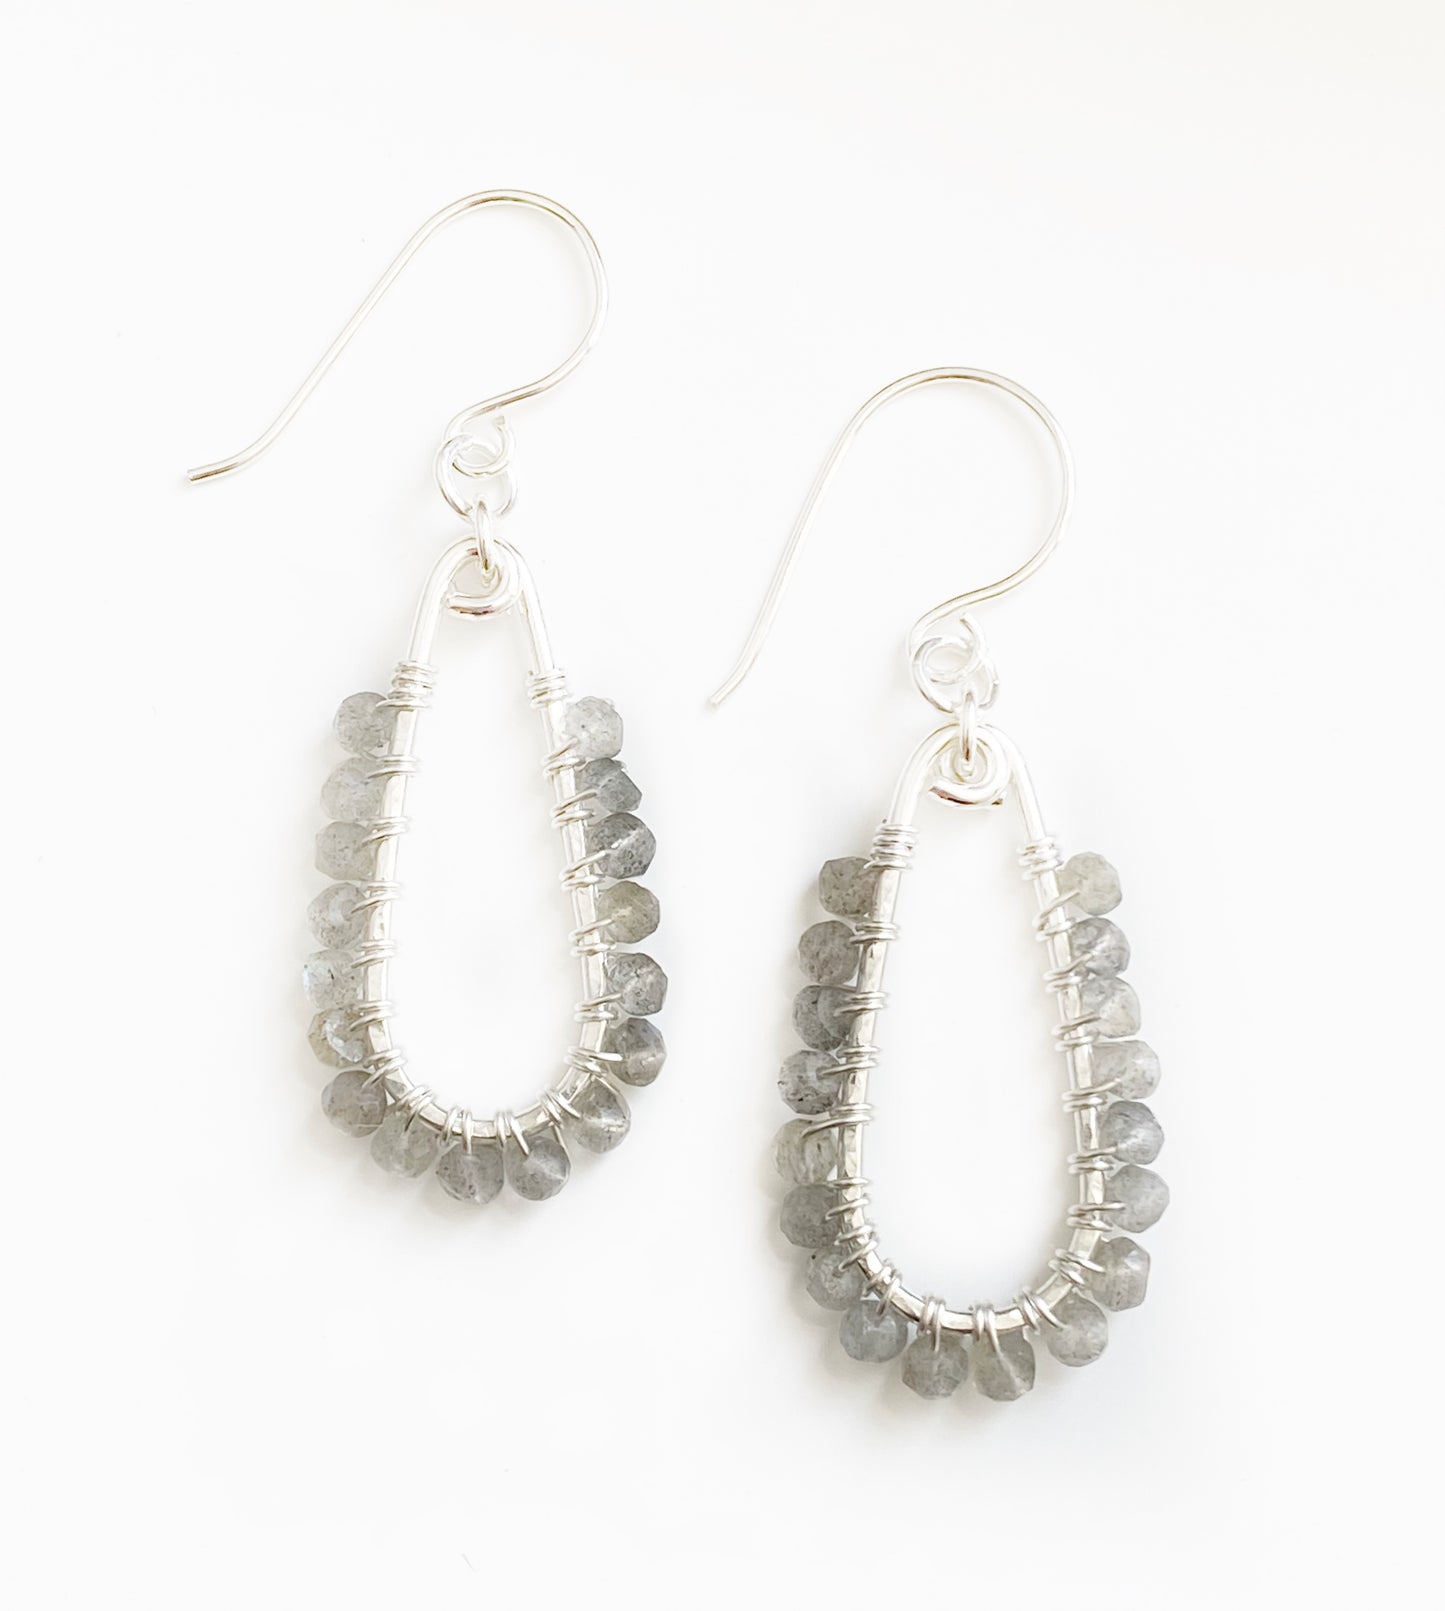 Labradorite wire wrapped sterling silver earrings.